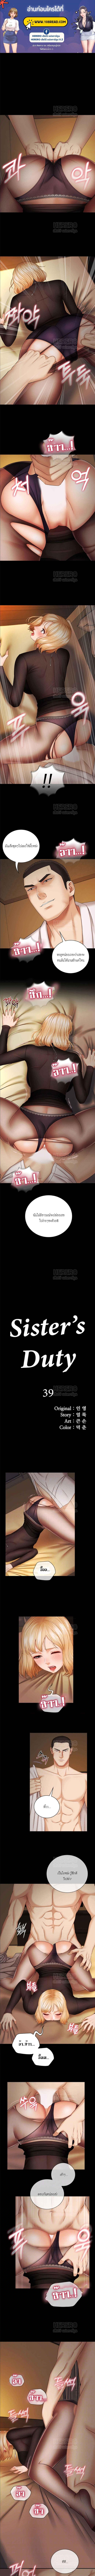 My Sister’s Duty 39 1